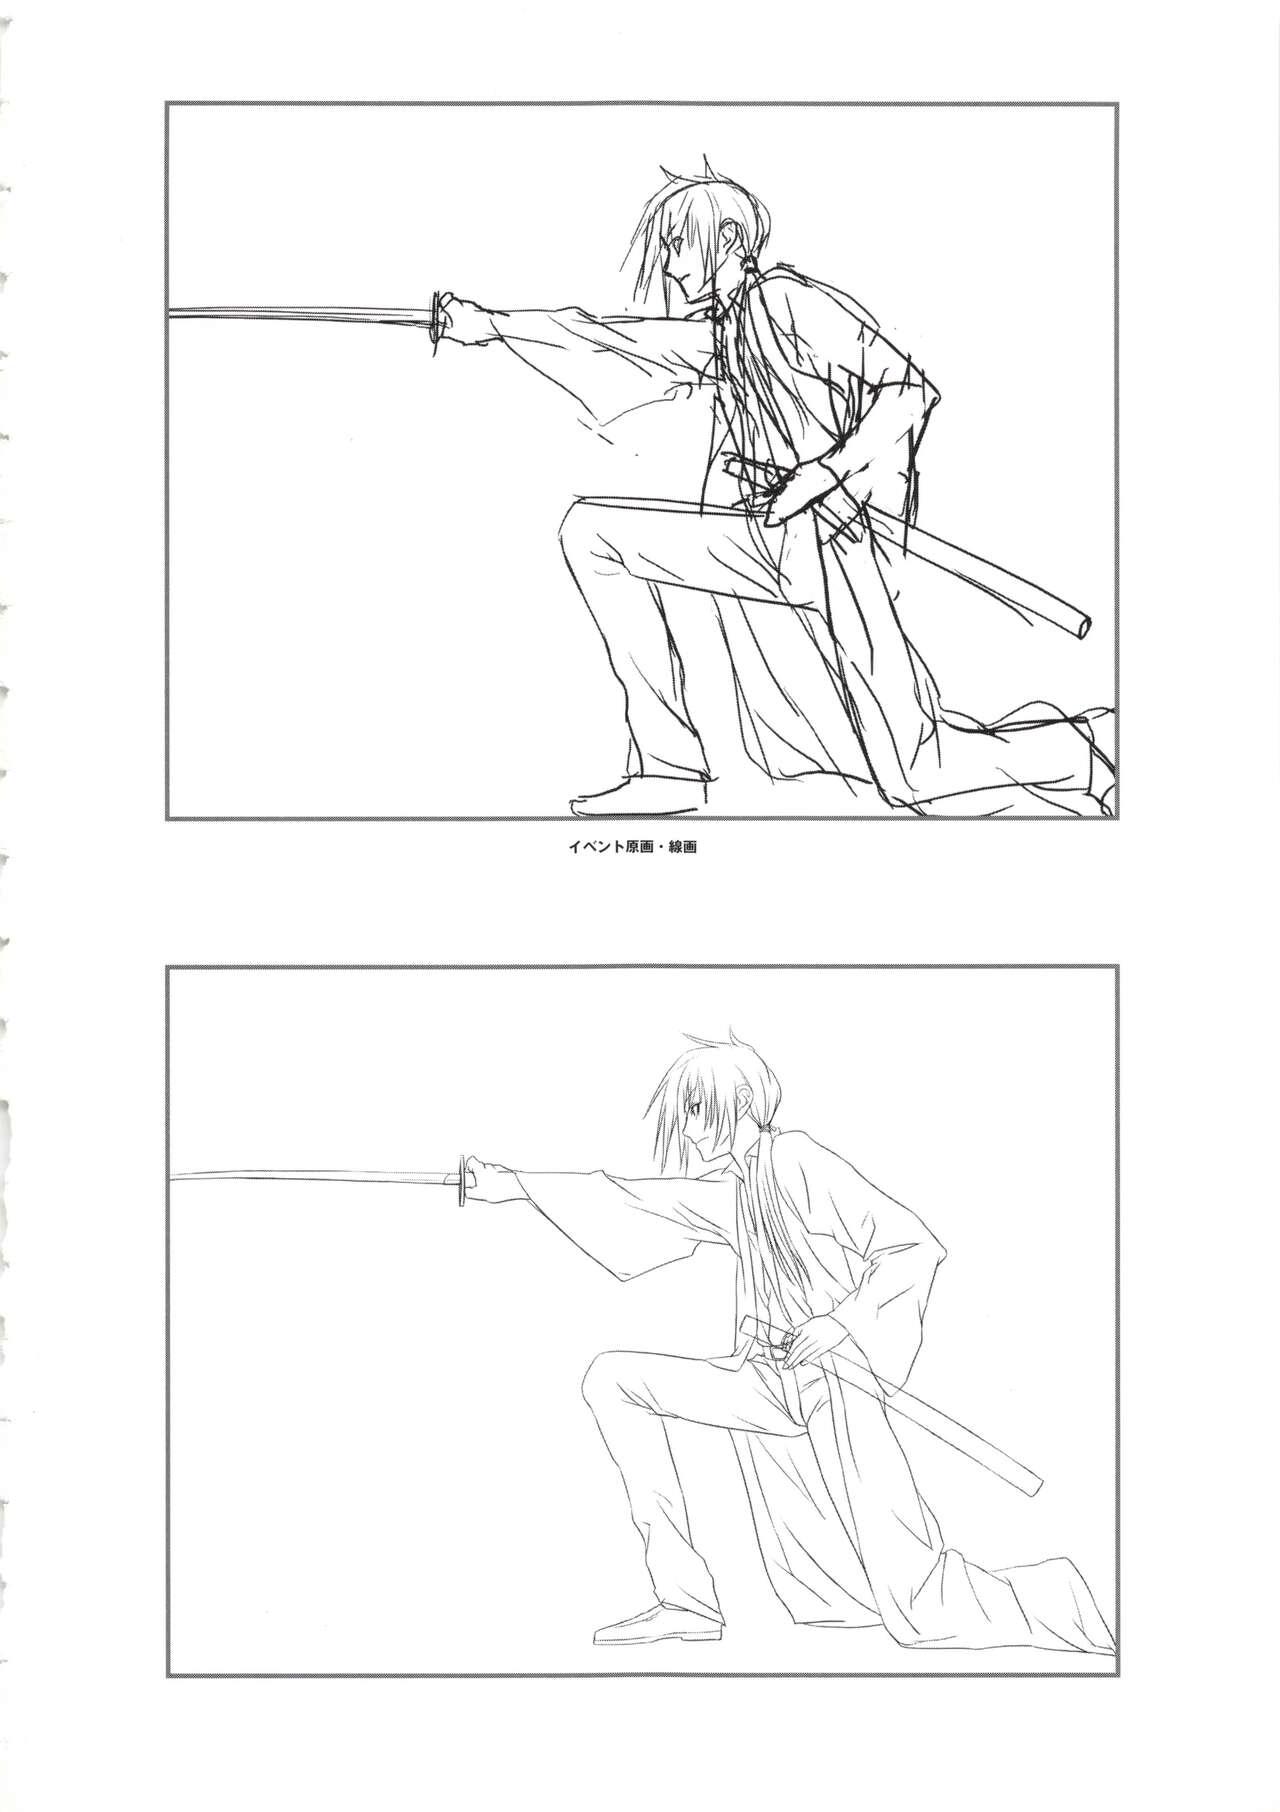 Hanachirasu - Initial Sketches and Unprocessed Illustrations - Selection 38